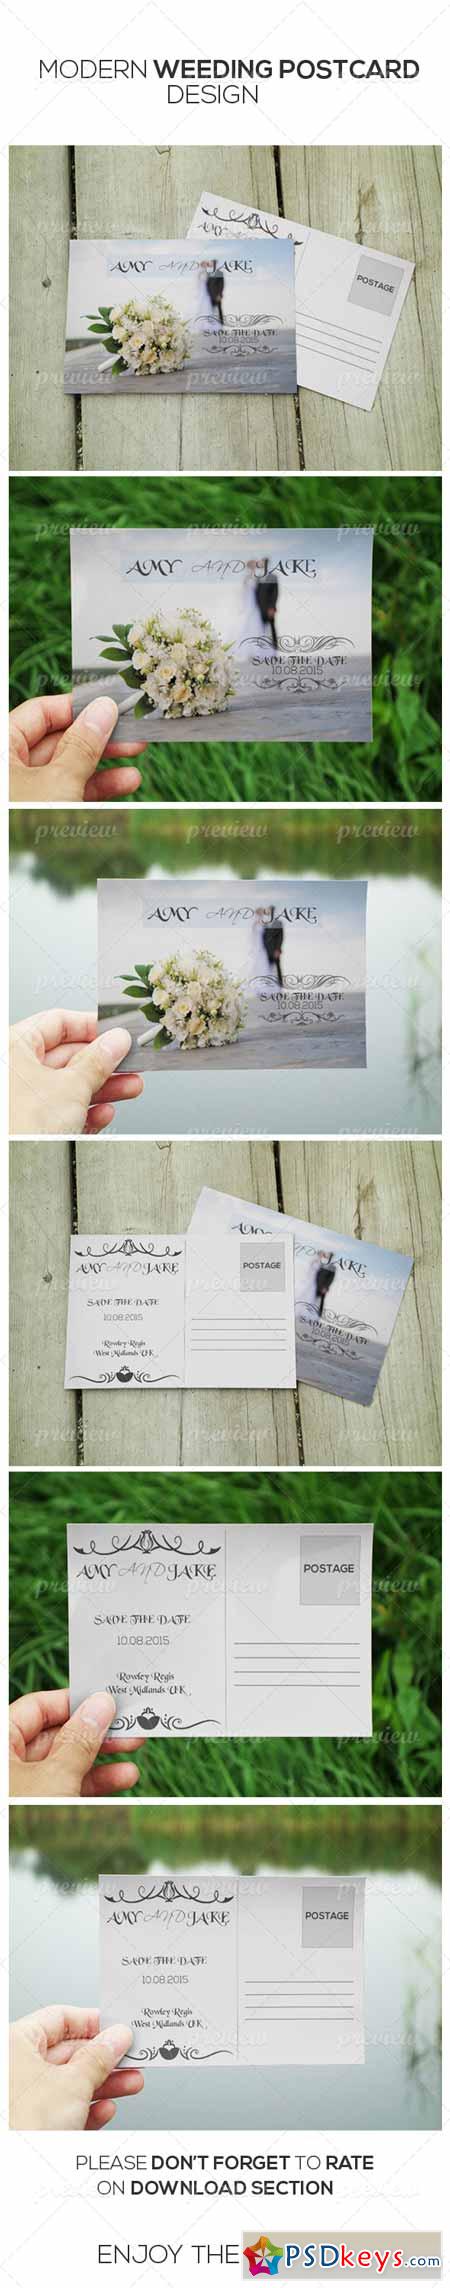 Modern Style Wedding invitation Post Card 4428